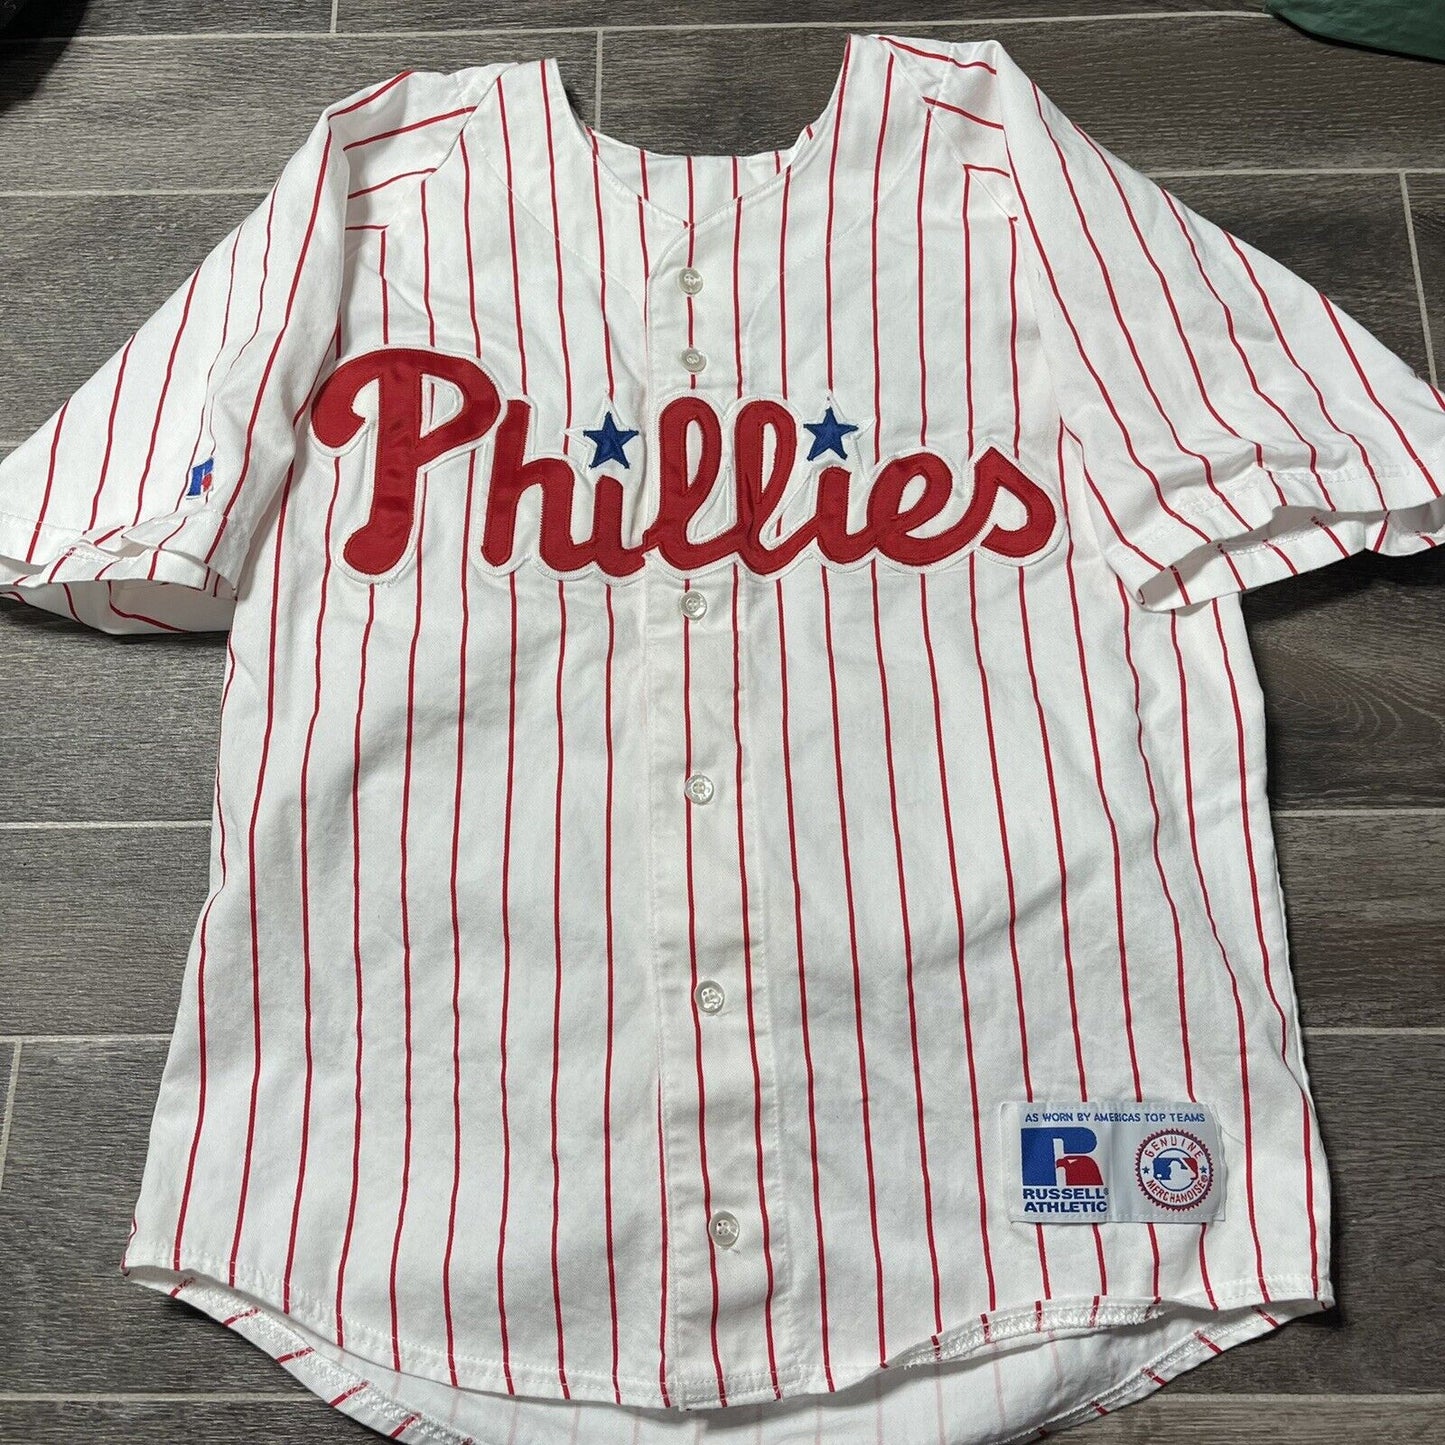 Philadelphia Phillies Russel Athletic jersey plain size M